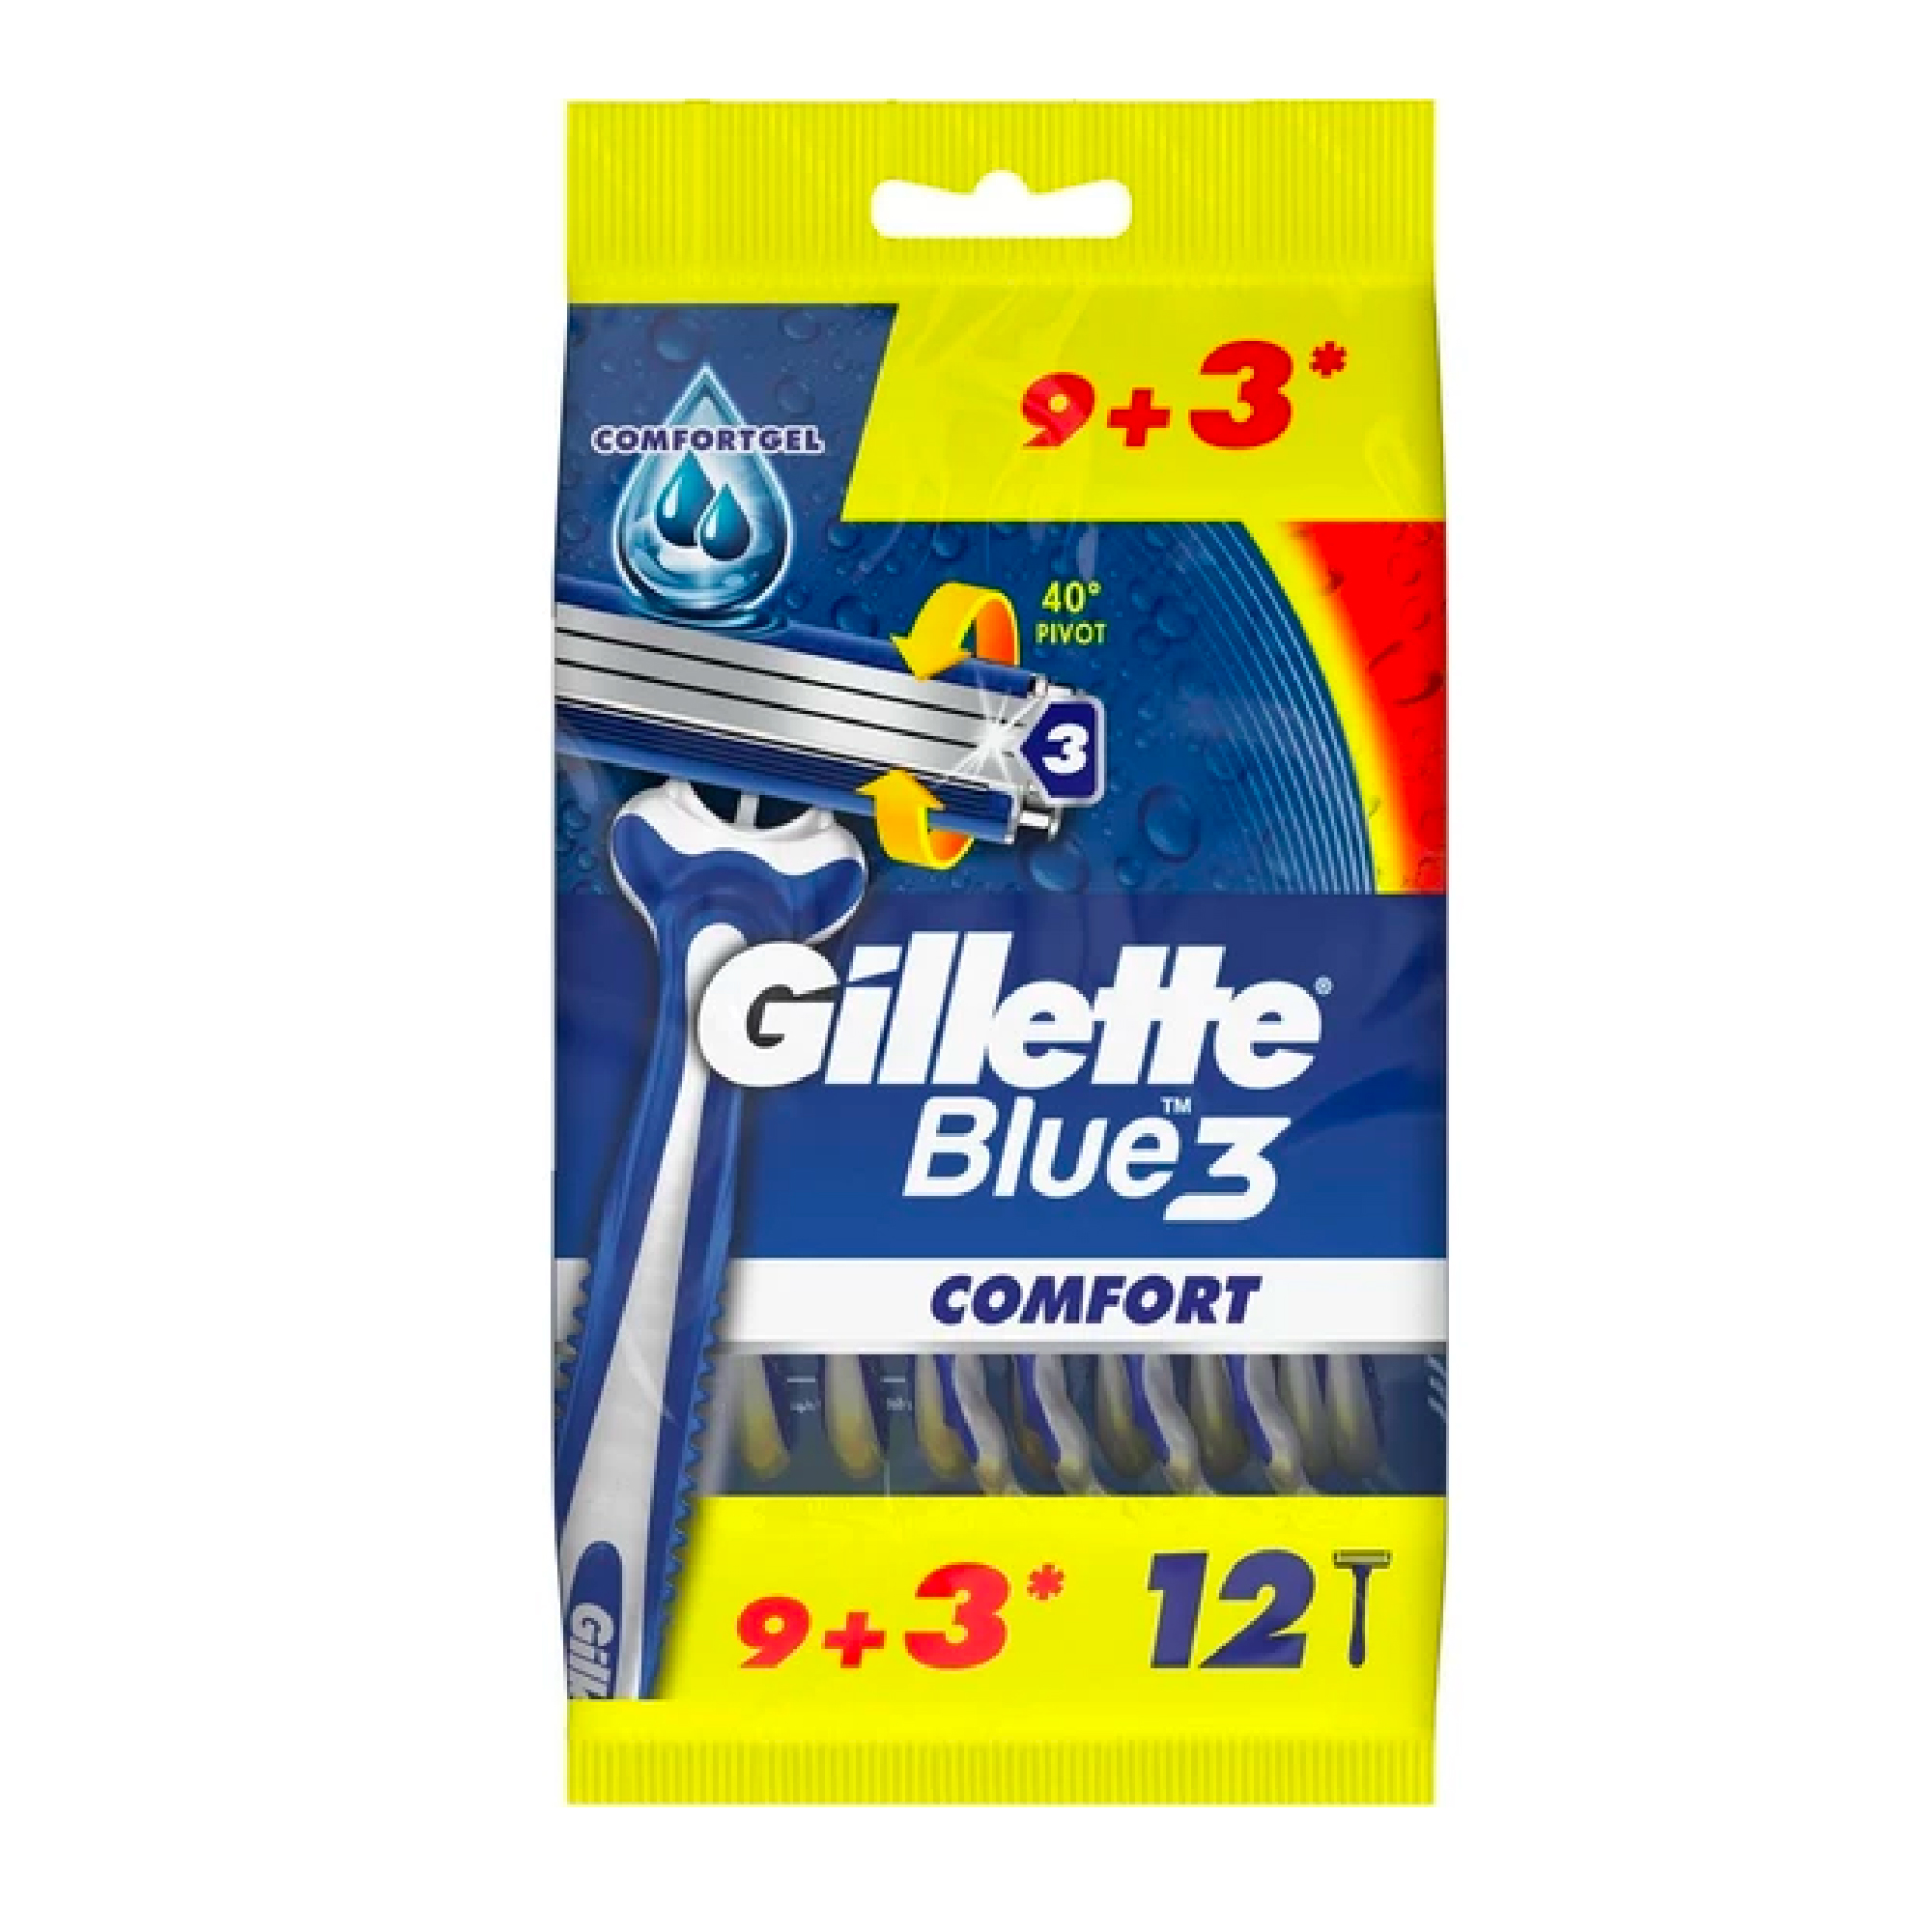 Gillette Blue 3 Comfort Kullan At Tıraş Bıçağı 9+3 12'li 7702018490608